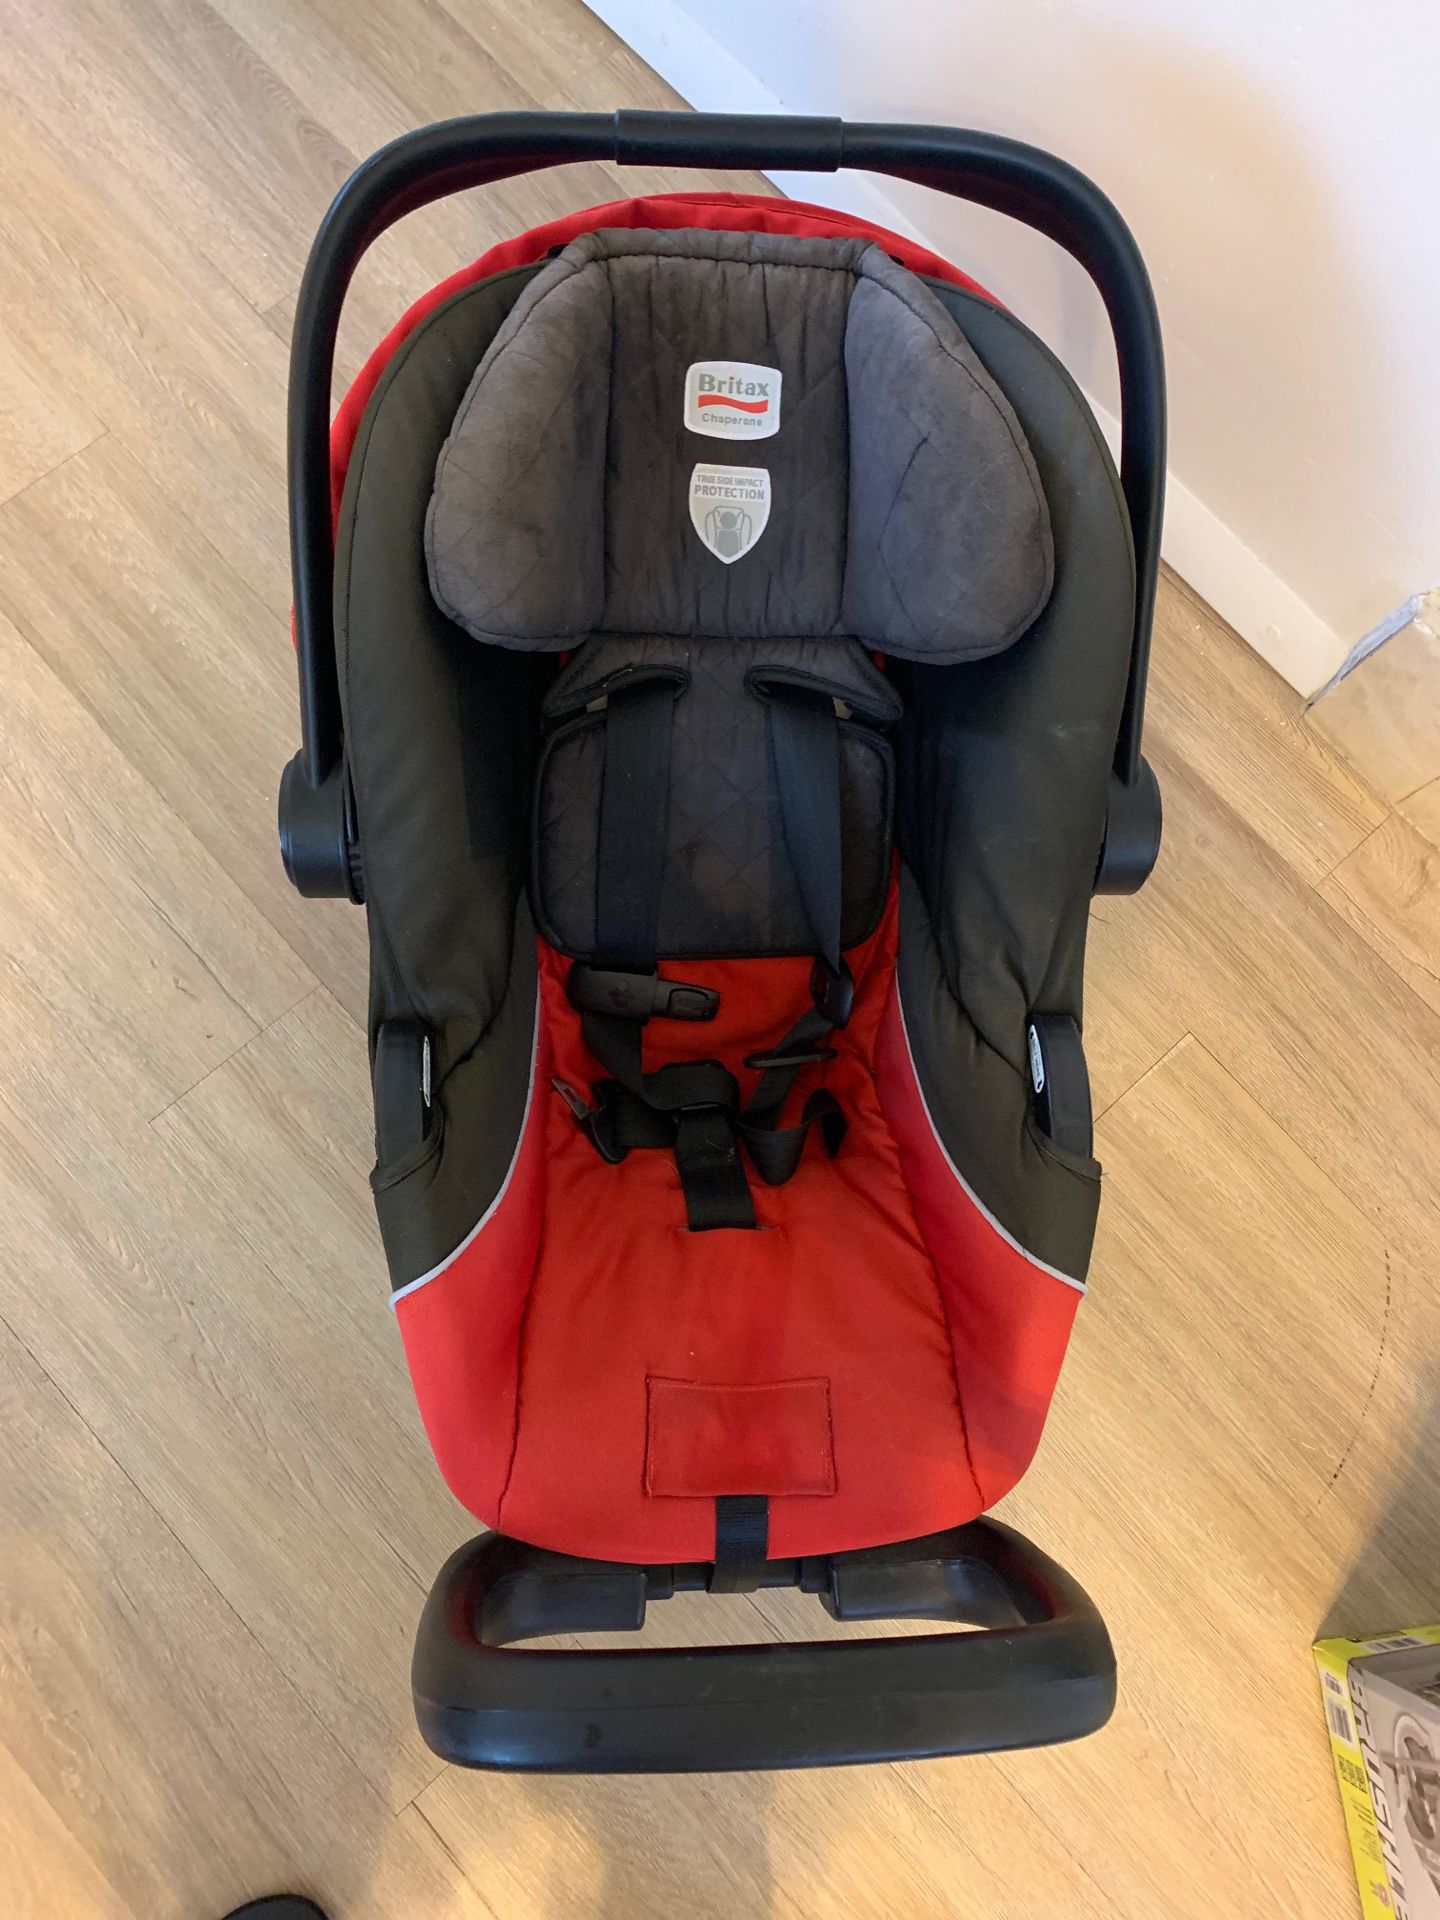 Britax chaperone baby car seat